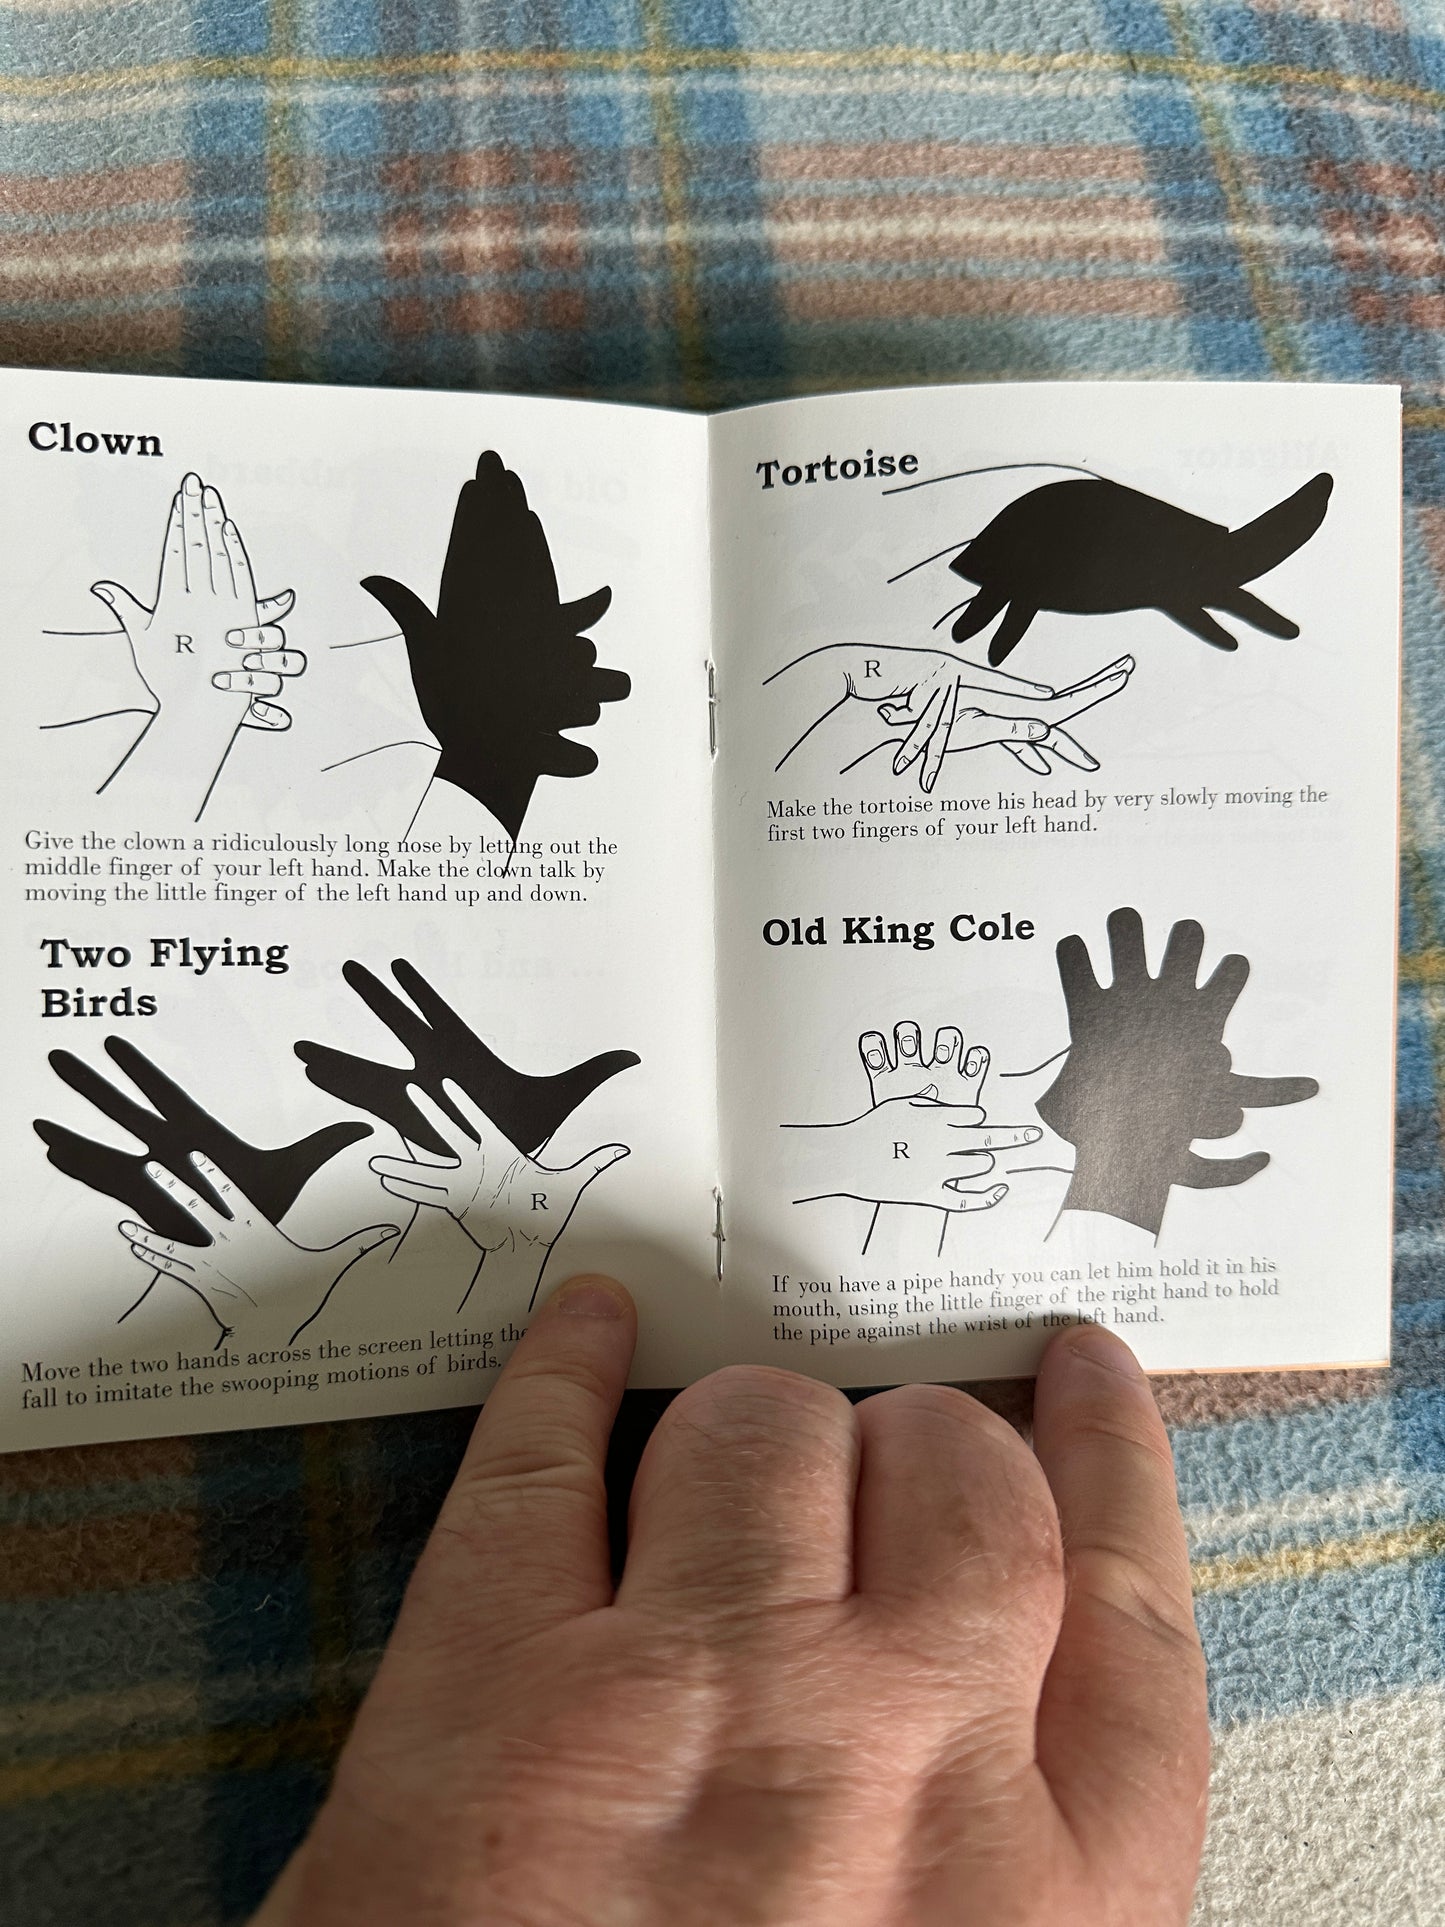 1997 Hand Shadows(Tobar Ltd publisher